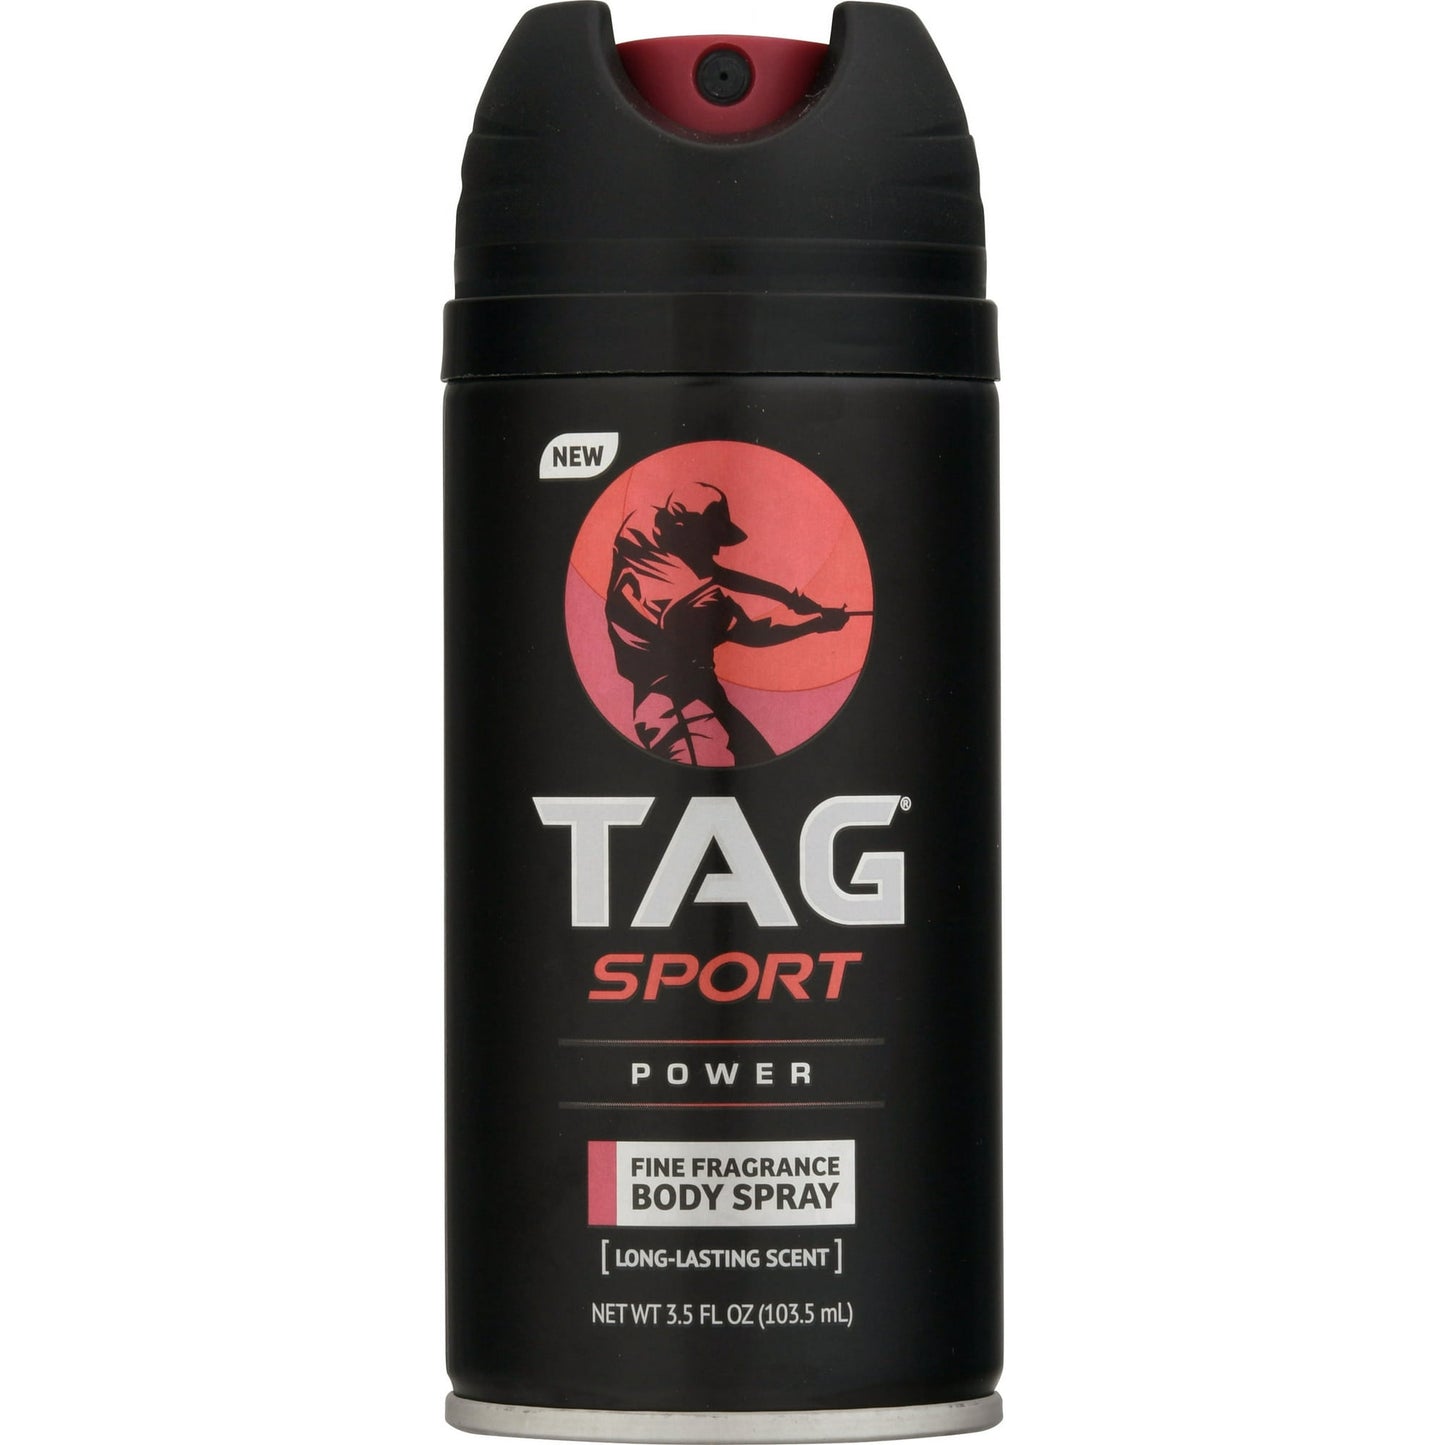 TAG Sport Body Spray, Fine Fragrance, 3.5 OZ (103.5 ML)